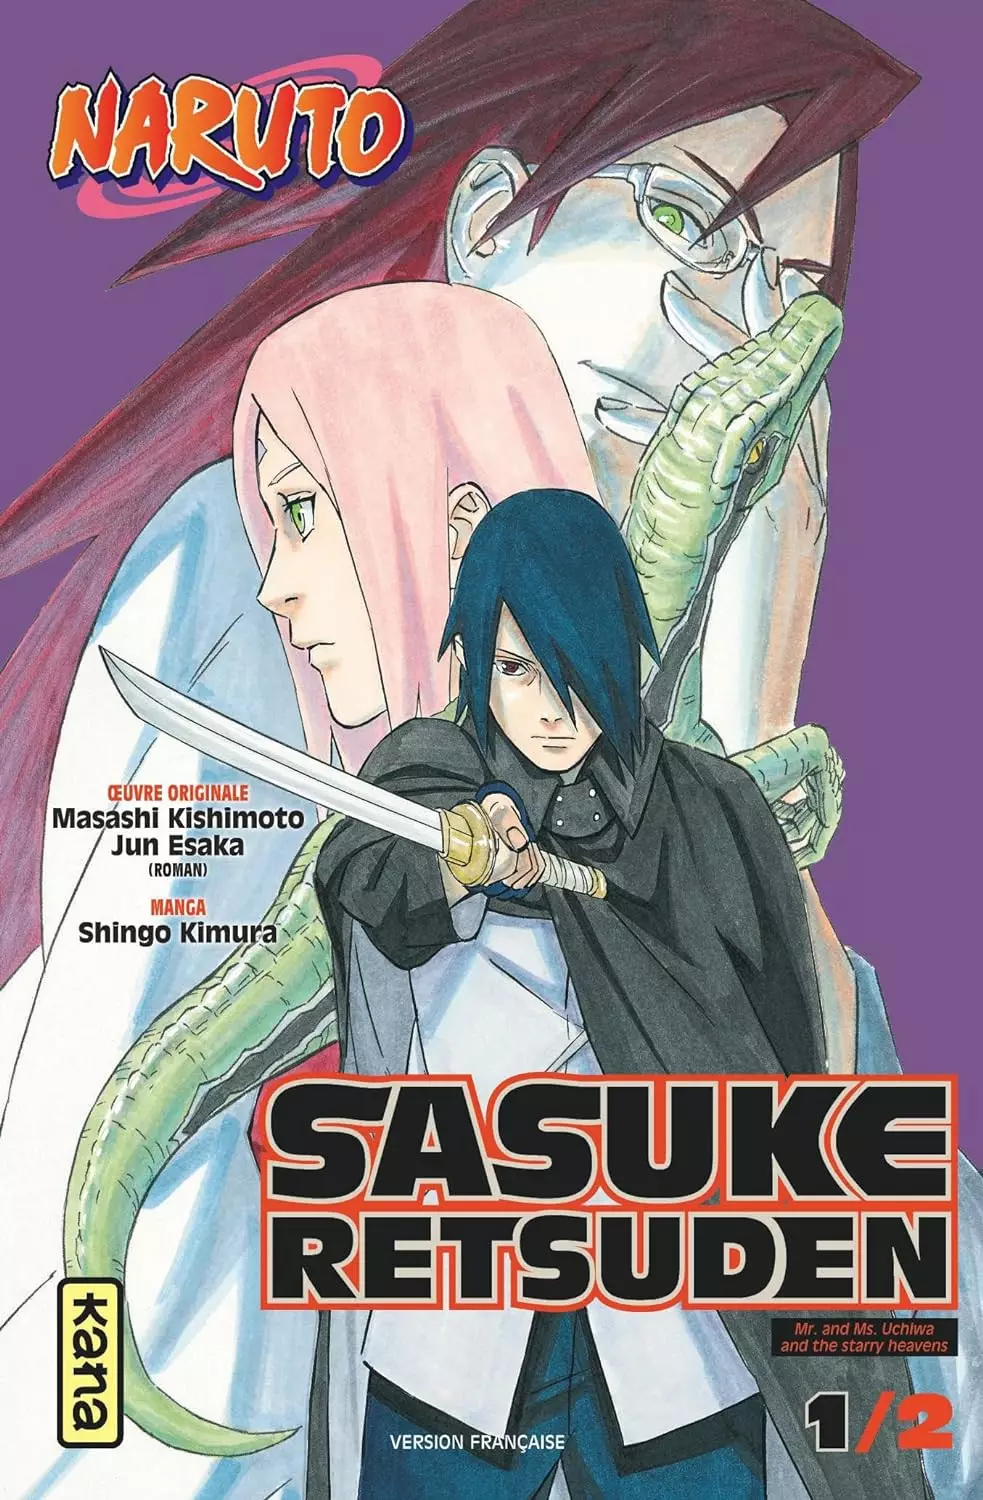 Naruto - Sasuke Retsuden Naruto_-_Sasuke_Retsuden_-_Tome_1_-_Kana